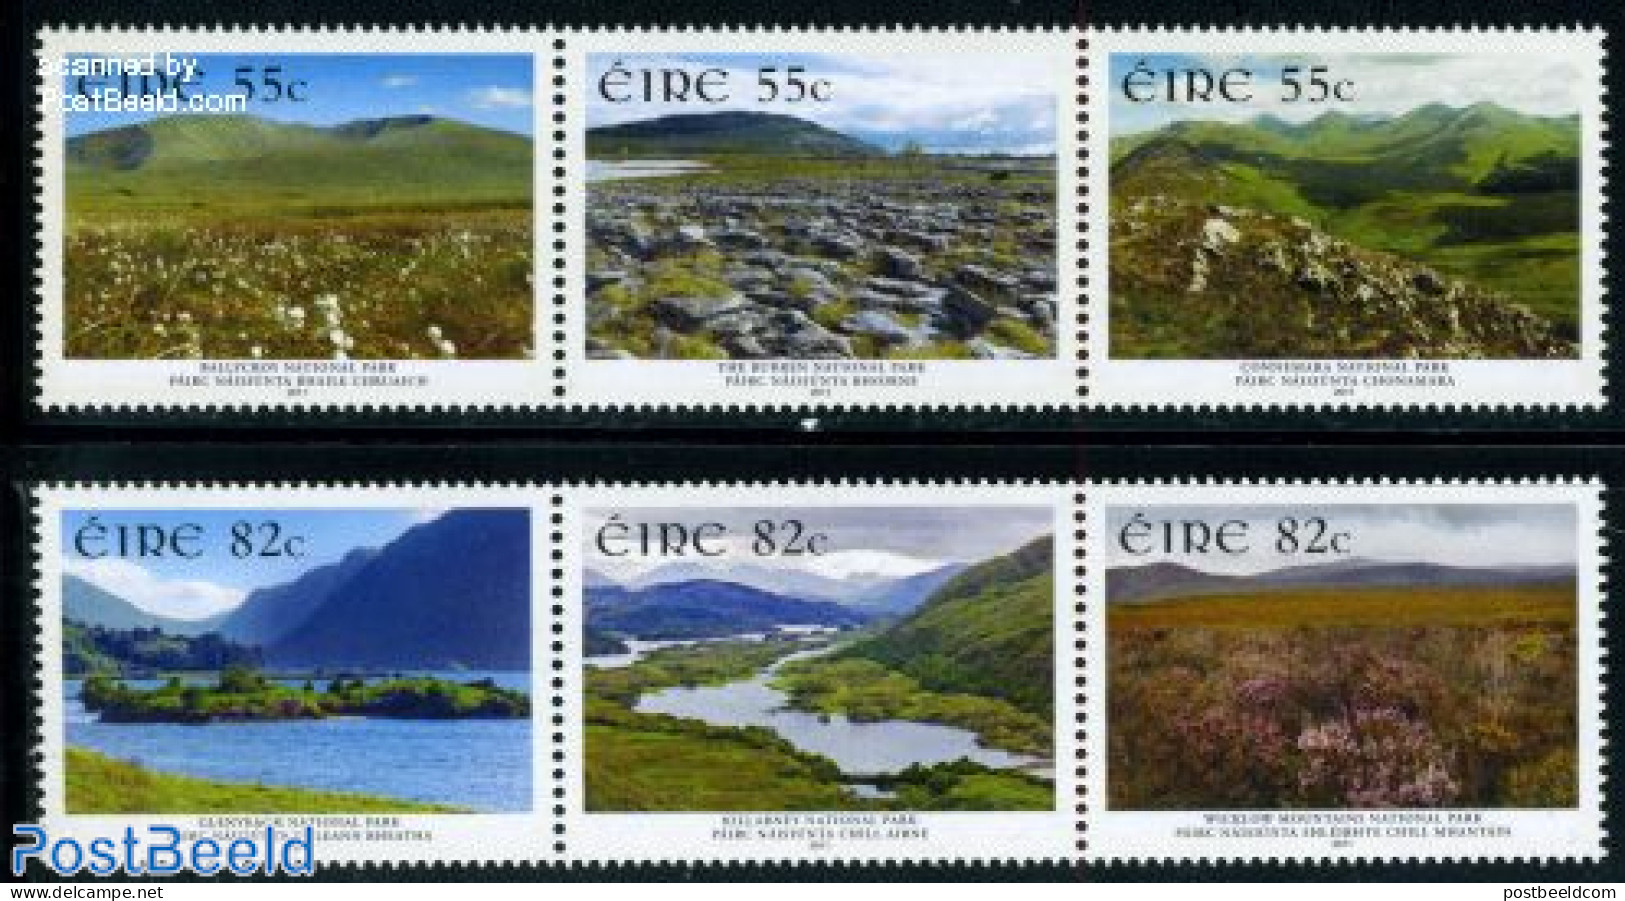 Ireland 2011 National Parks 6v (2 X [::]), Mint NH - Ungebraucht